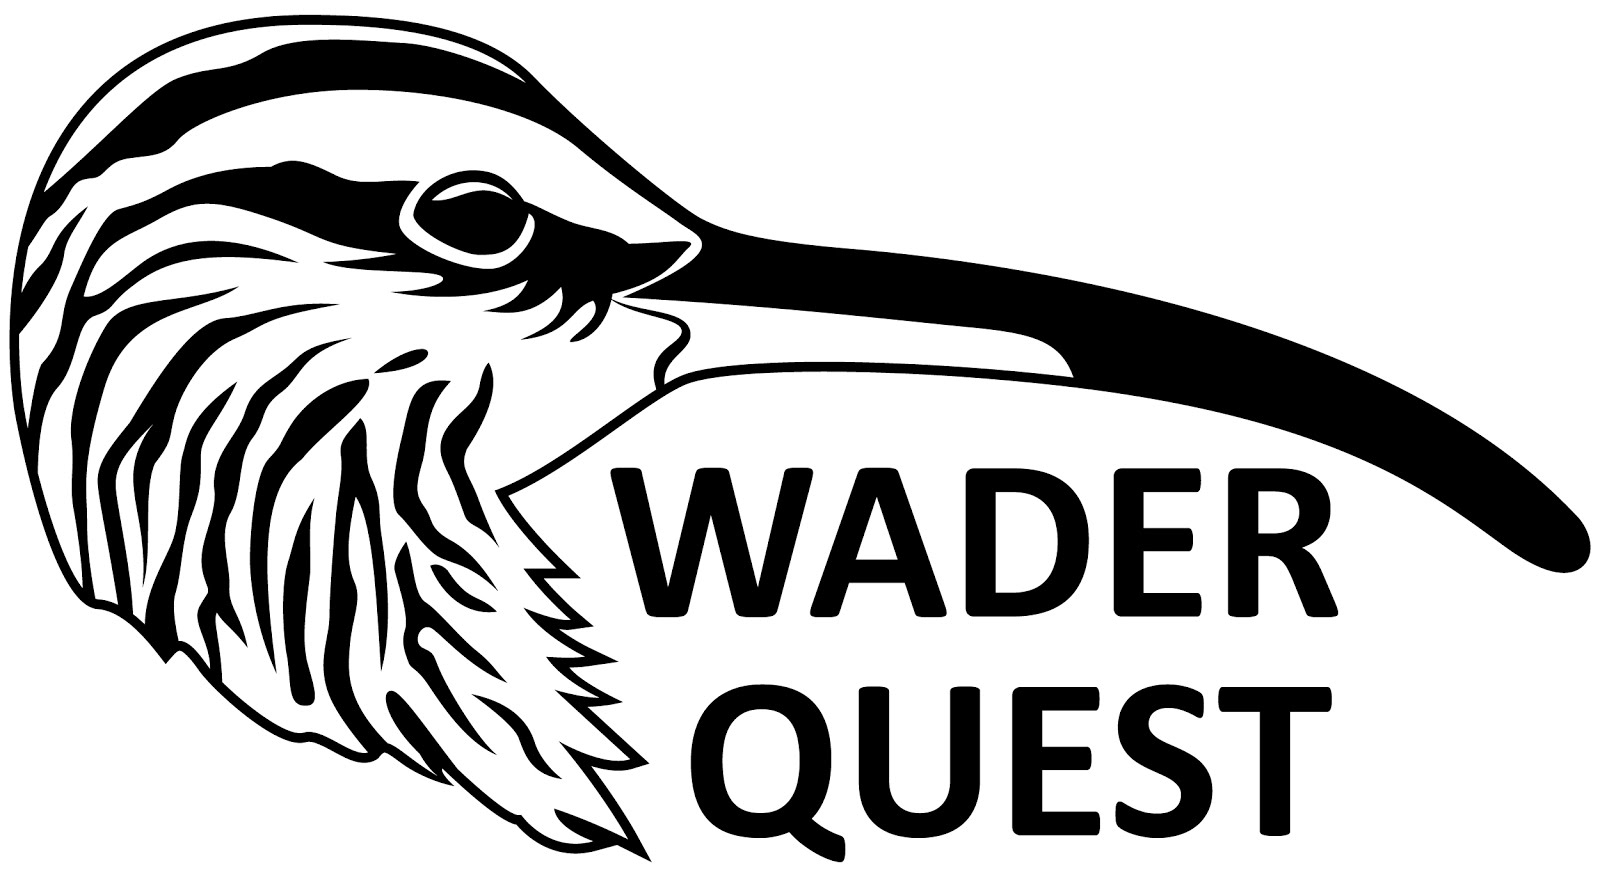 Wader Quest